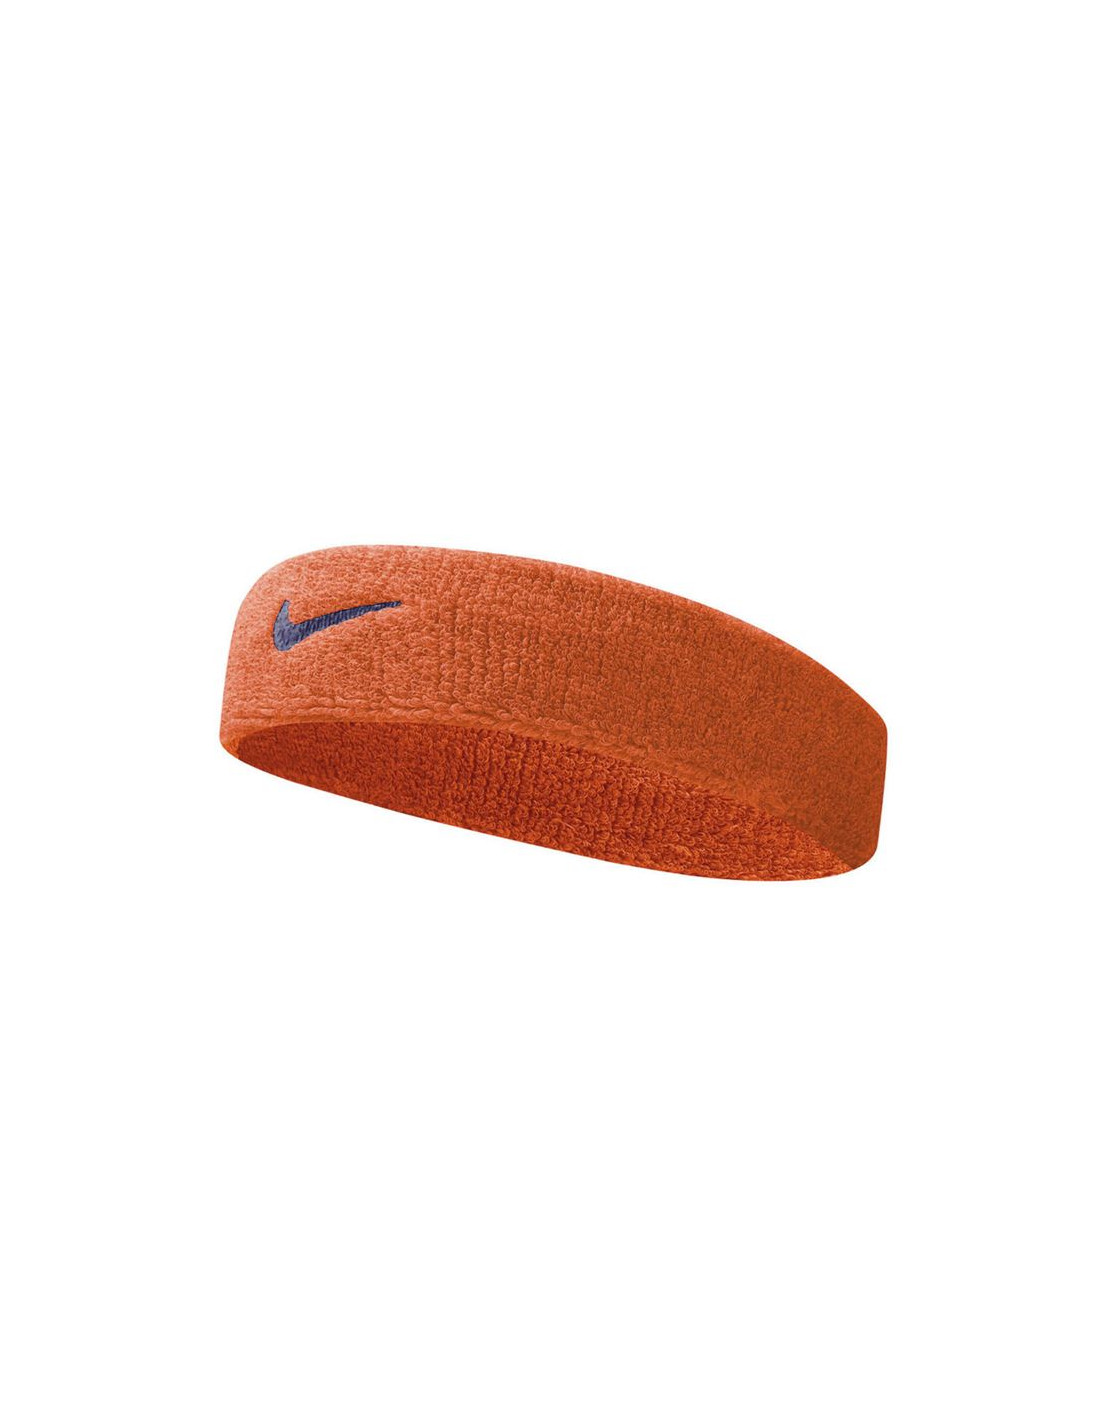 Nike swoosh headband